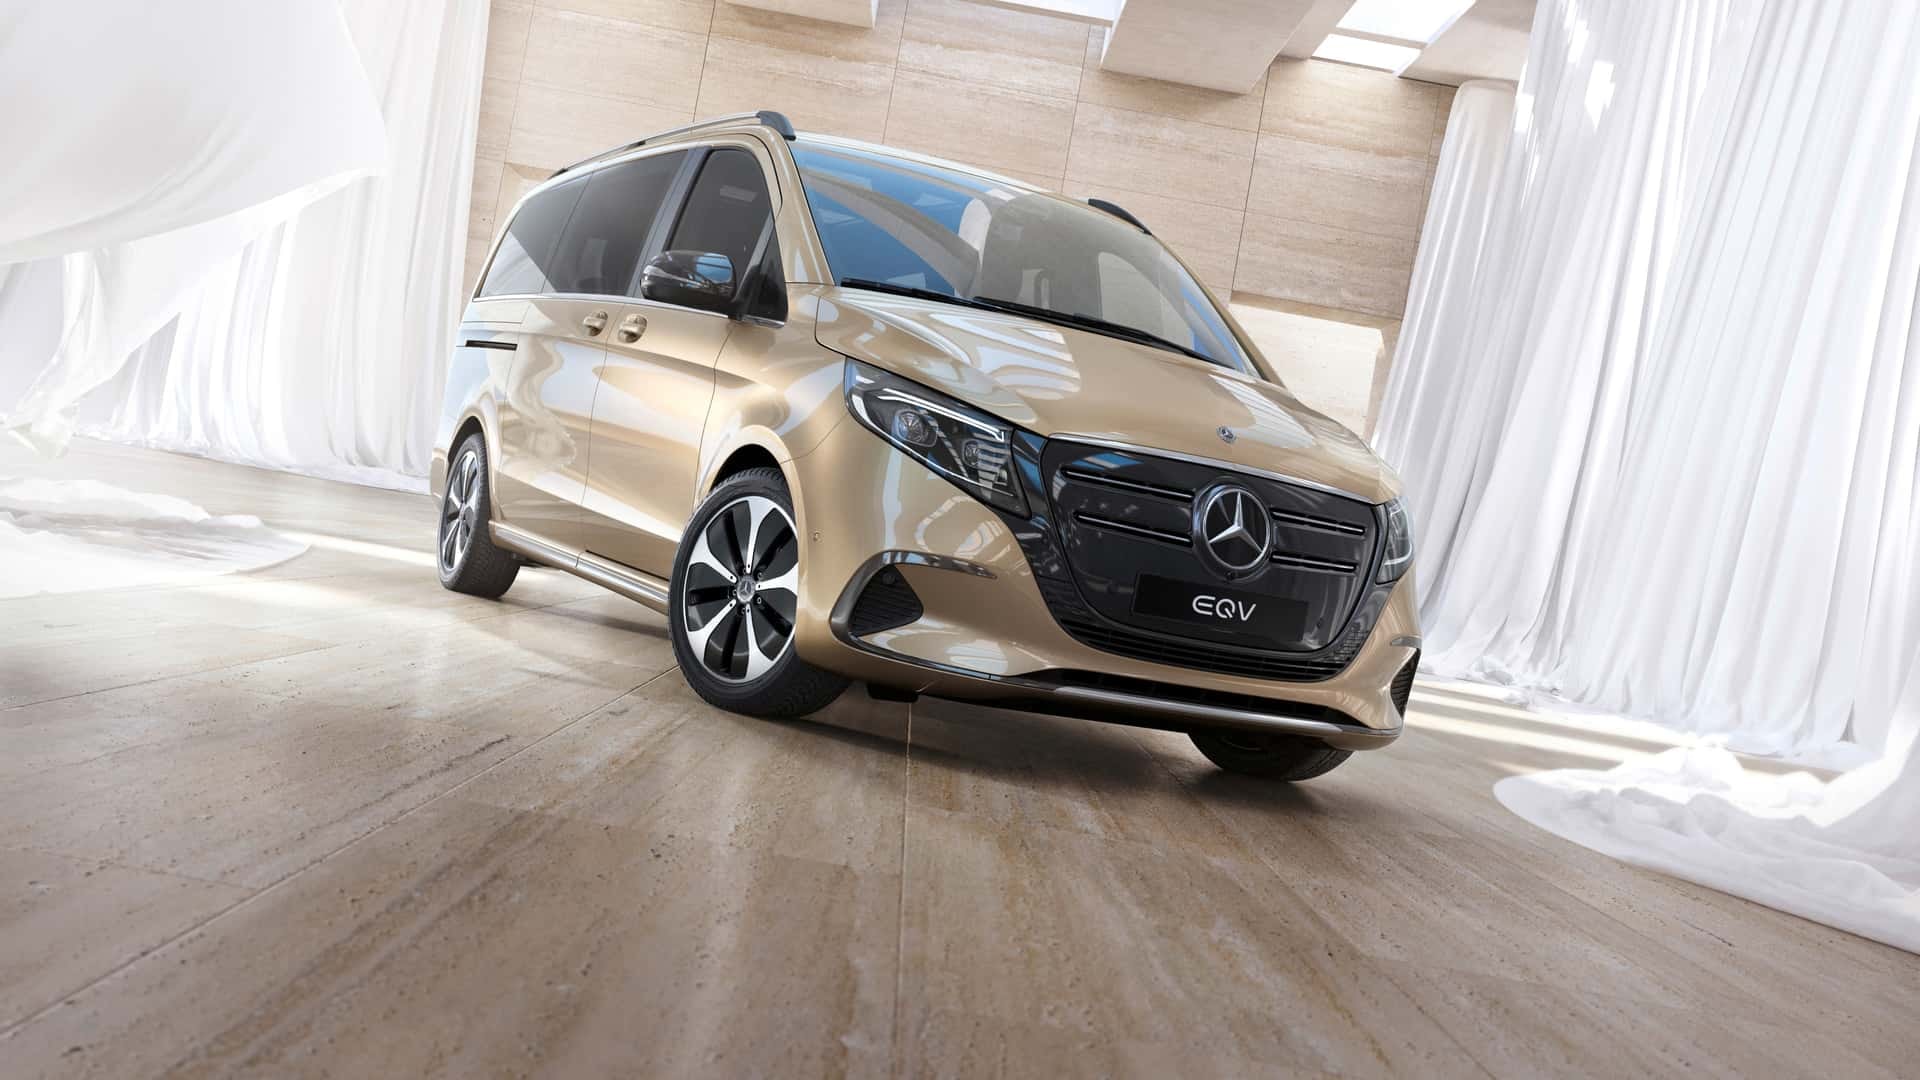 El Mercedes EQV muestra un diseño vanguardista y una estética limpia.